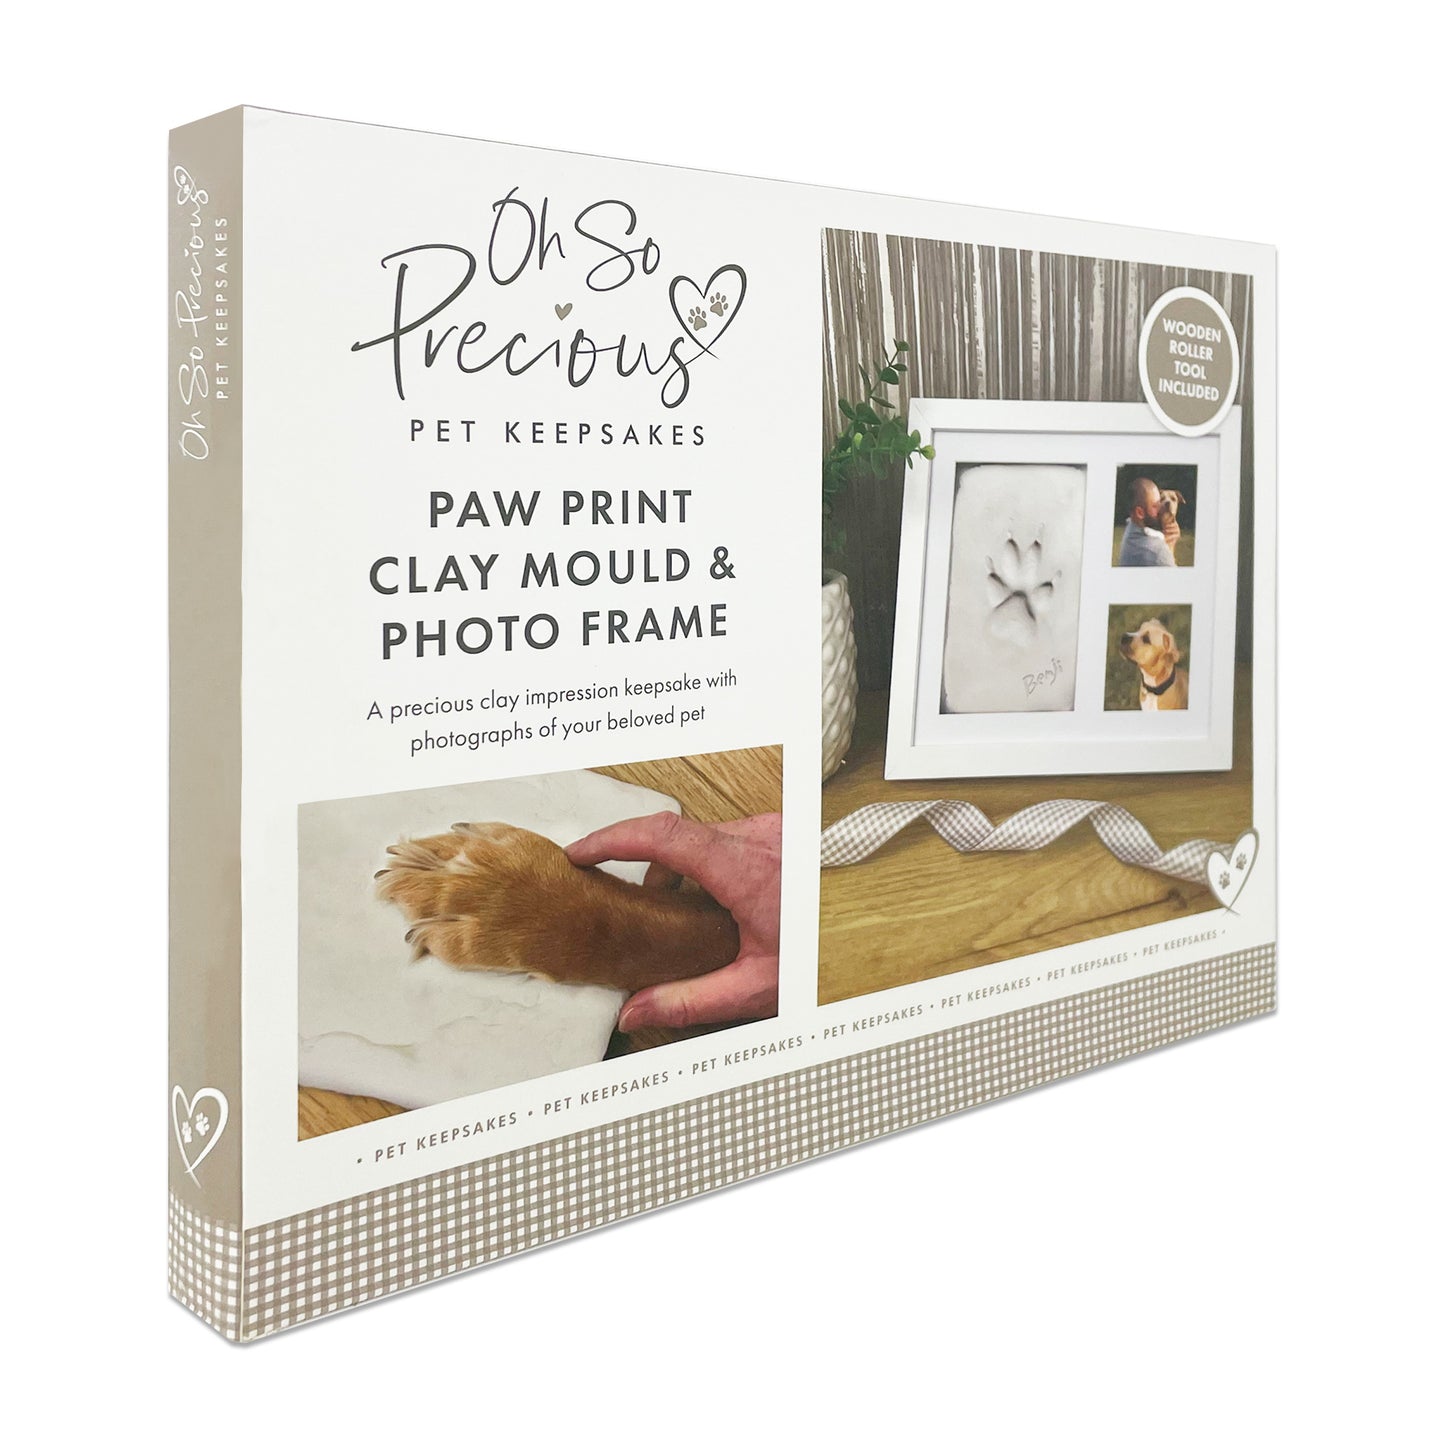 Paw Print Clay Mould & Photo Frame Kit